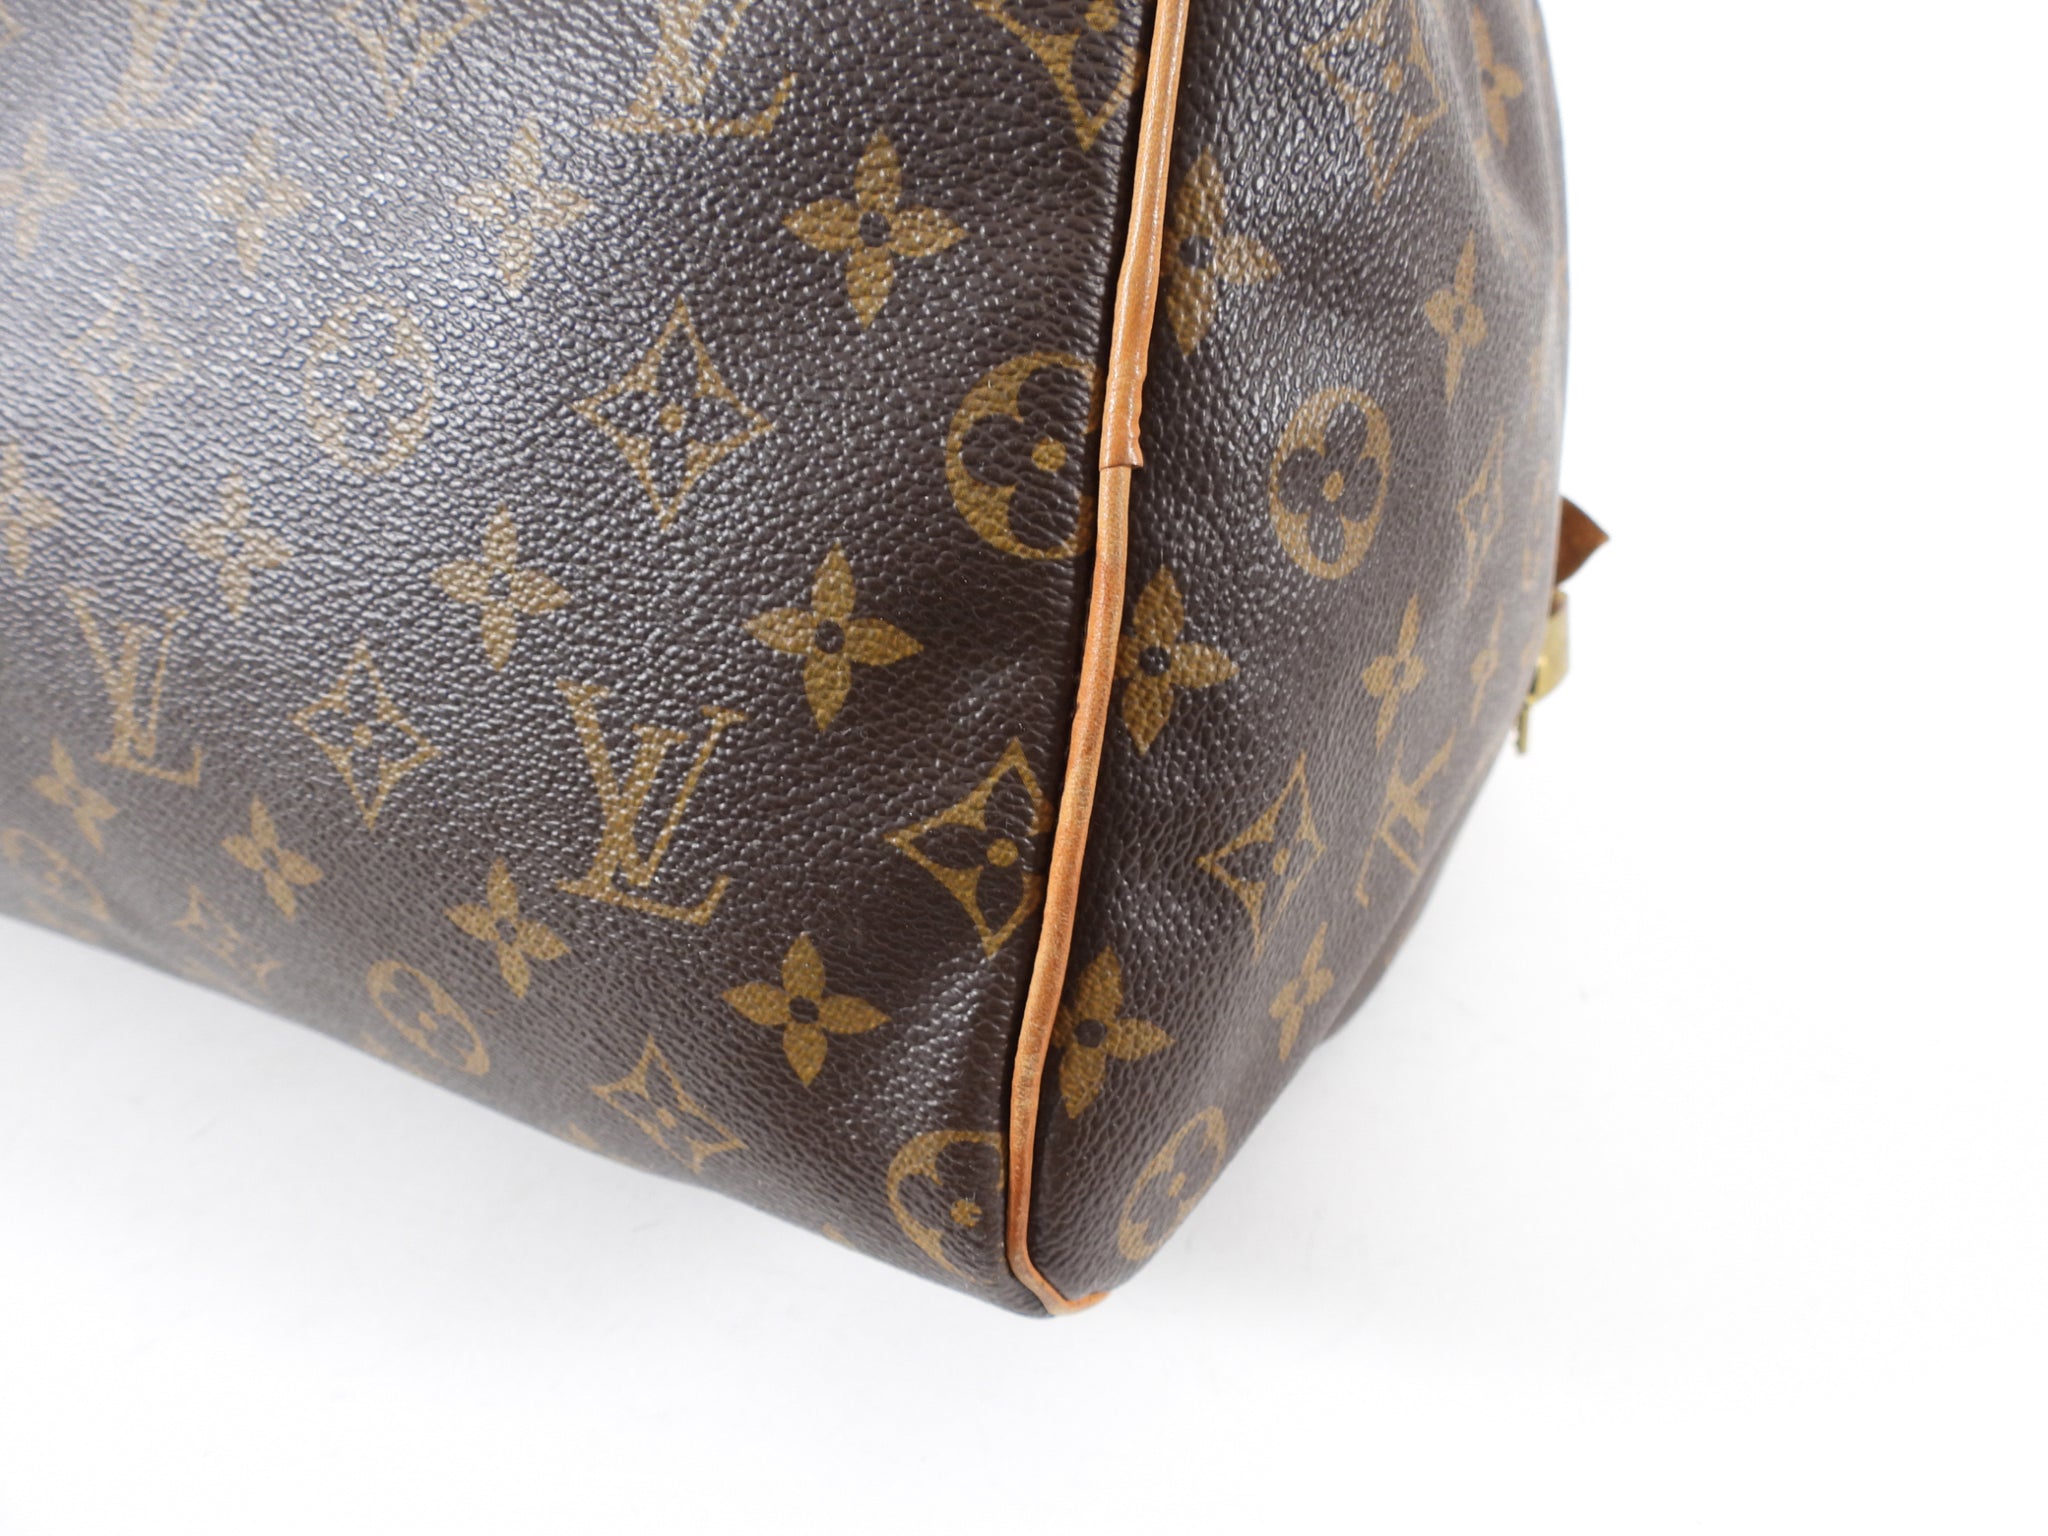 100% AUTHENTIC LOUIS Vuitton Keepall 45 Monogram Pacific Blue Luggage Bag  RARE! $16,805.20 - PicClick